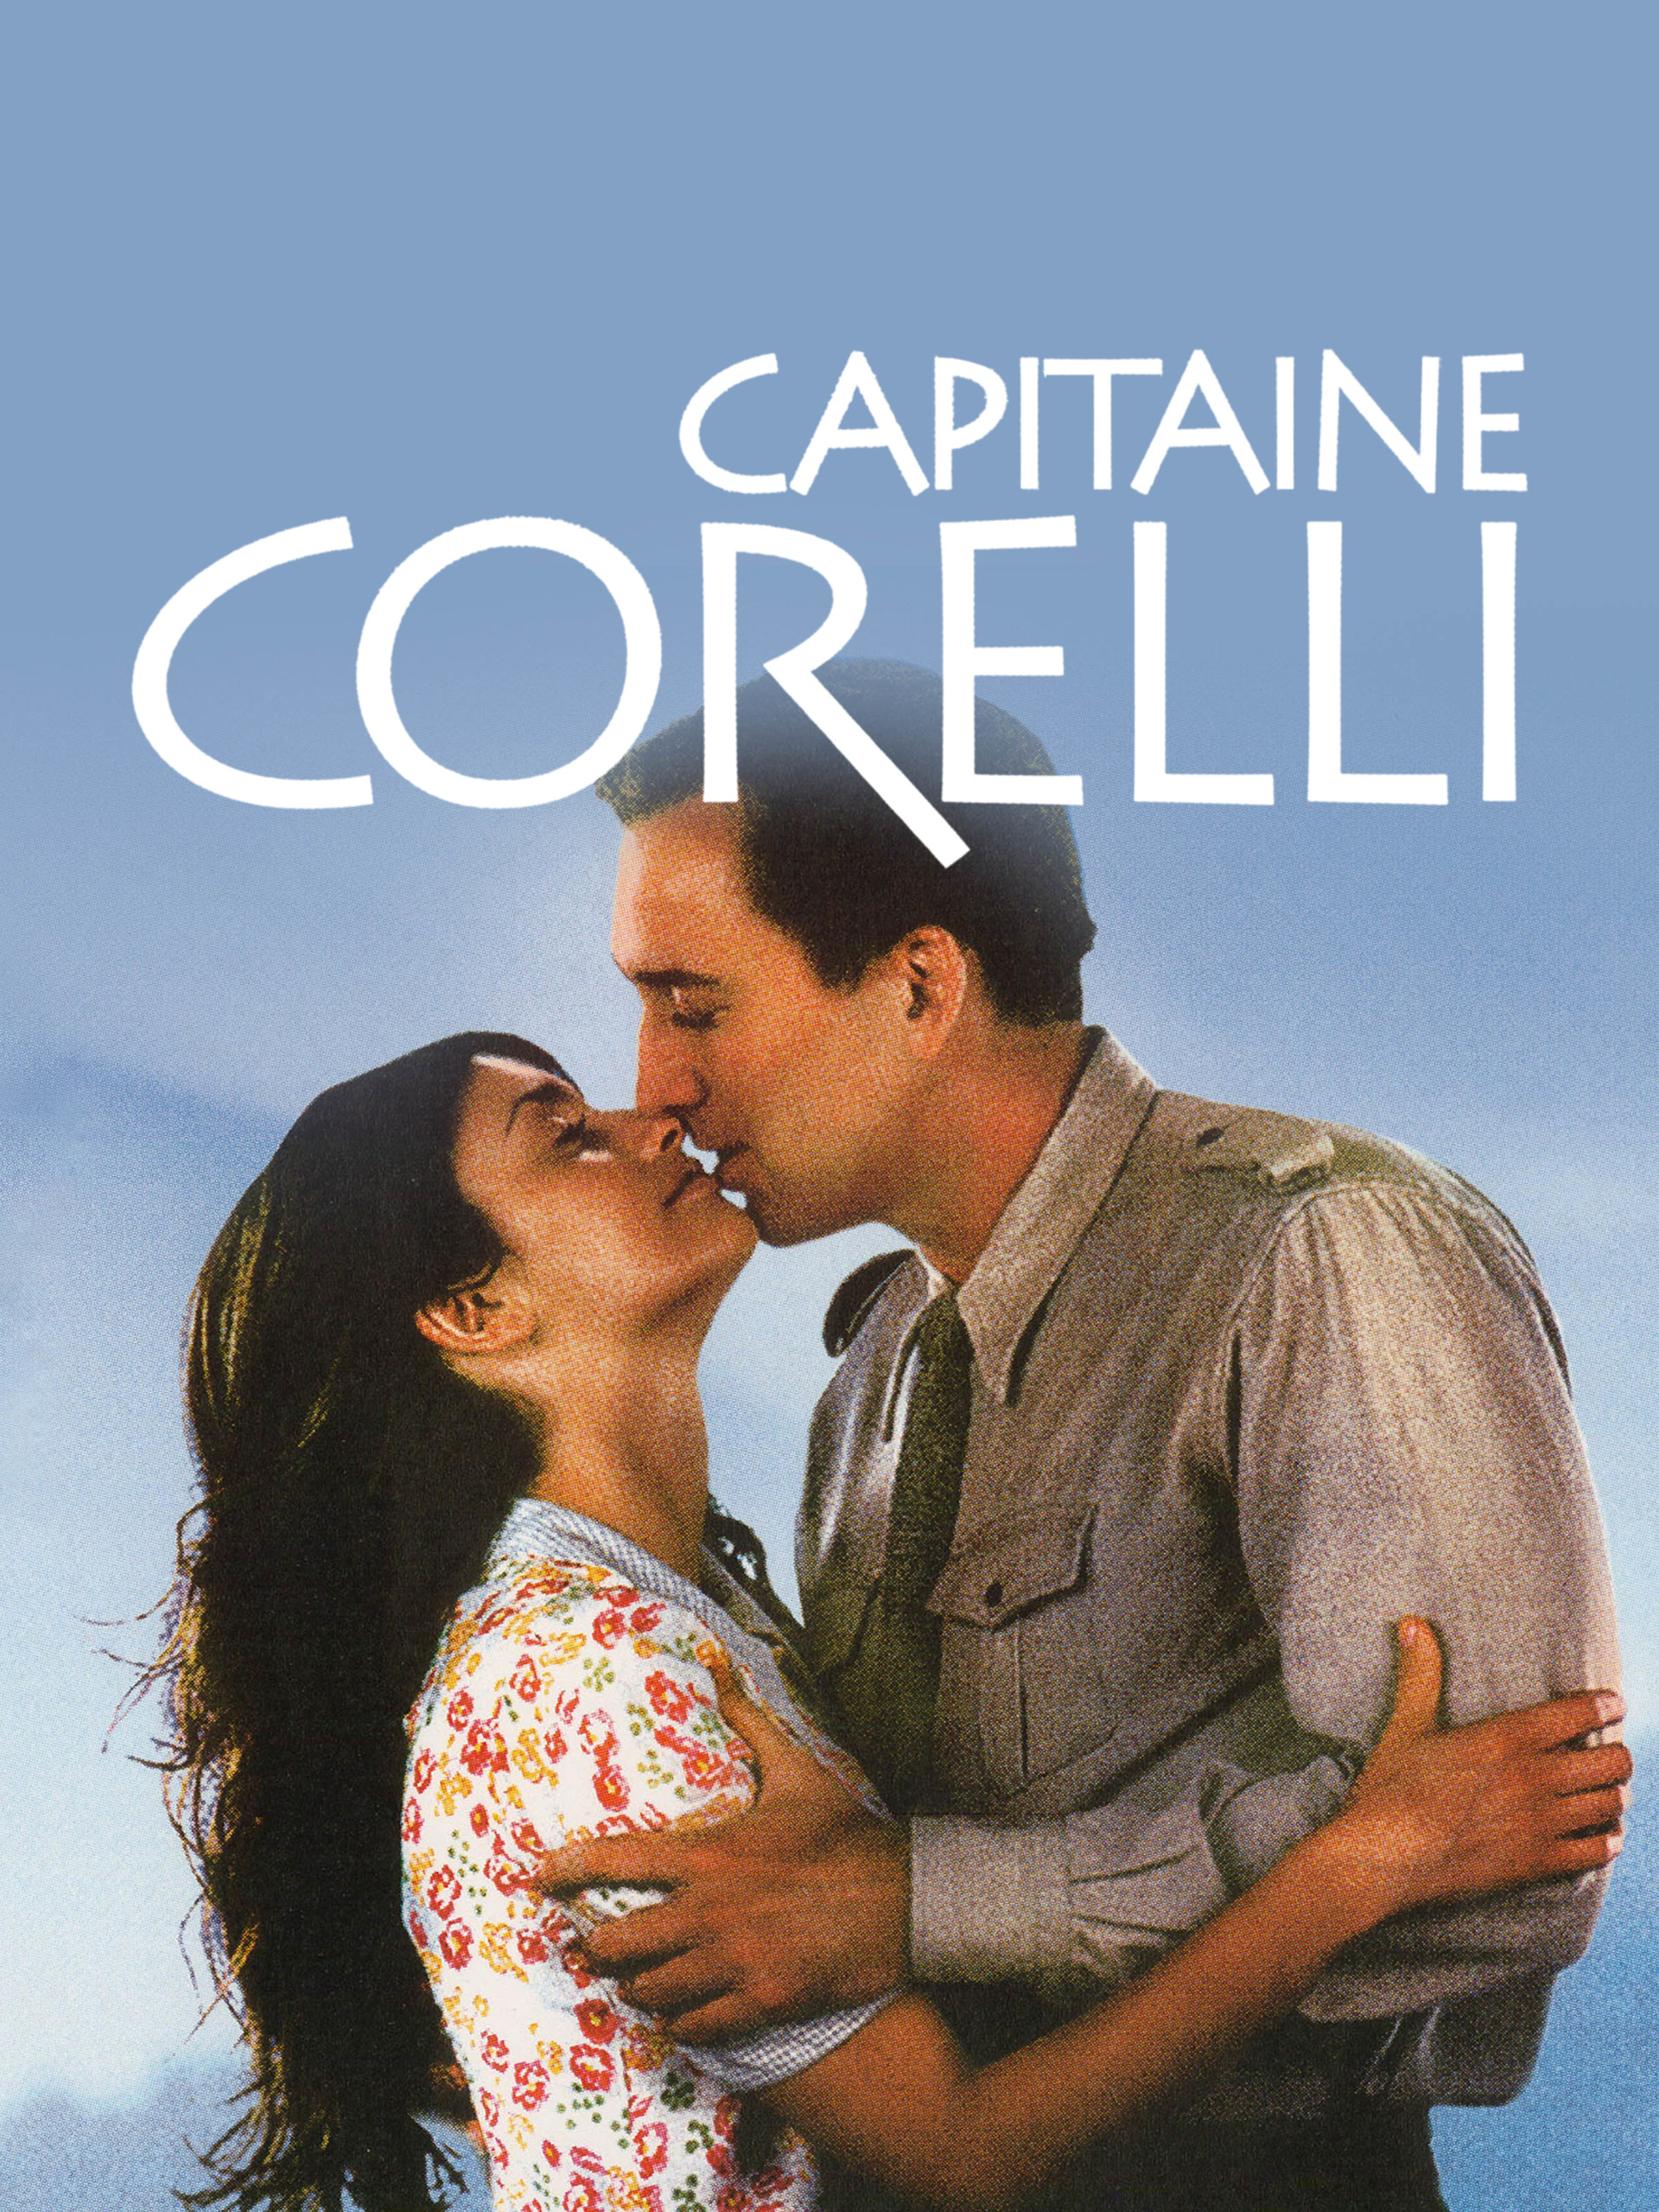 Capitaine Corelli